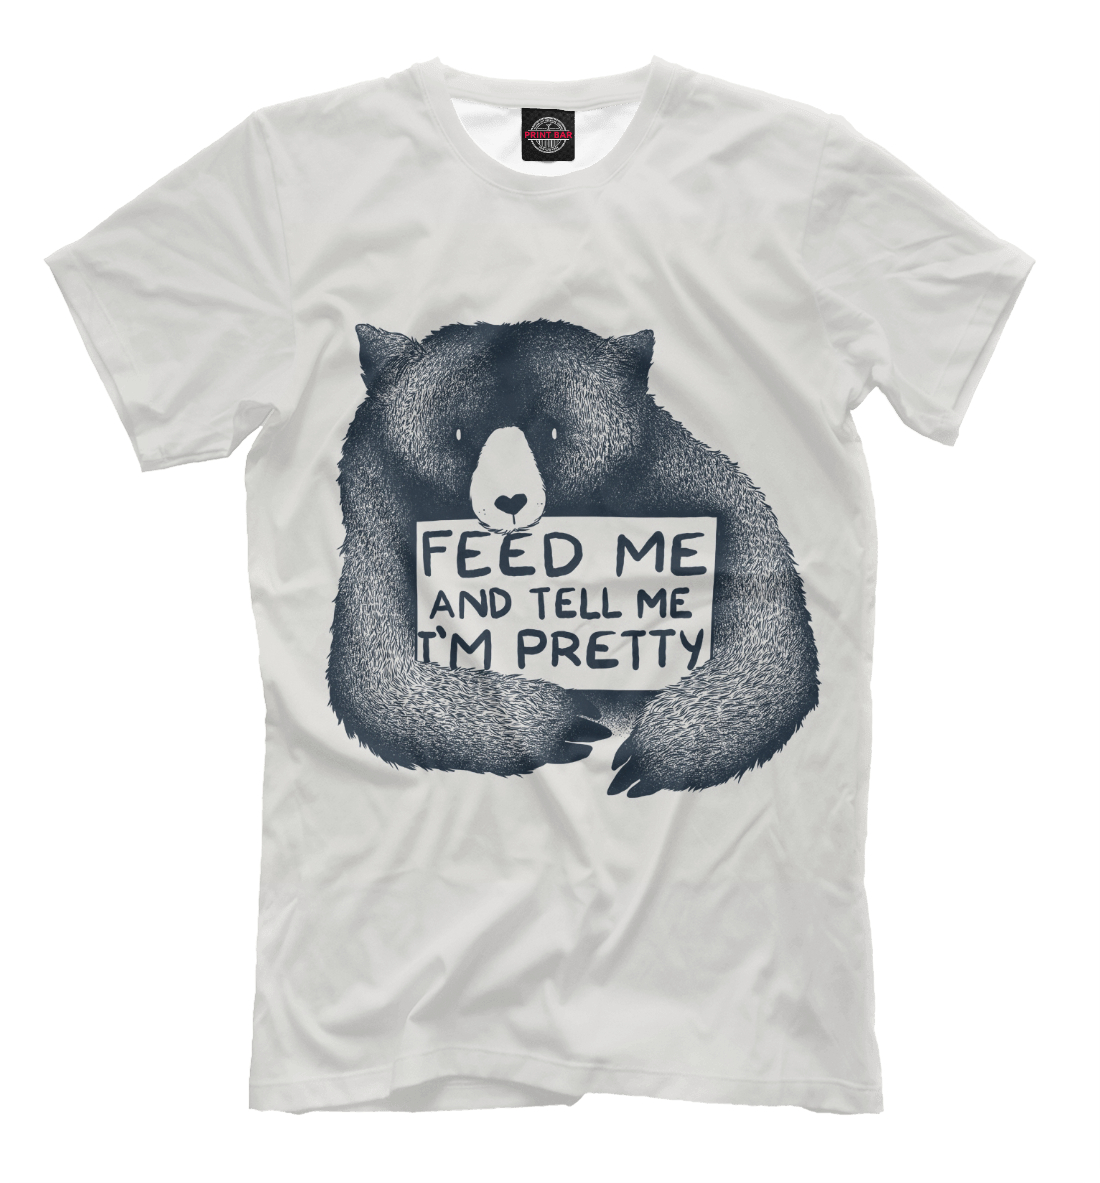 Feed me! feed